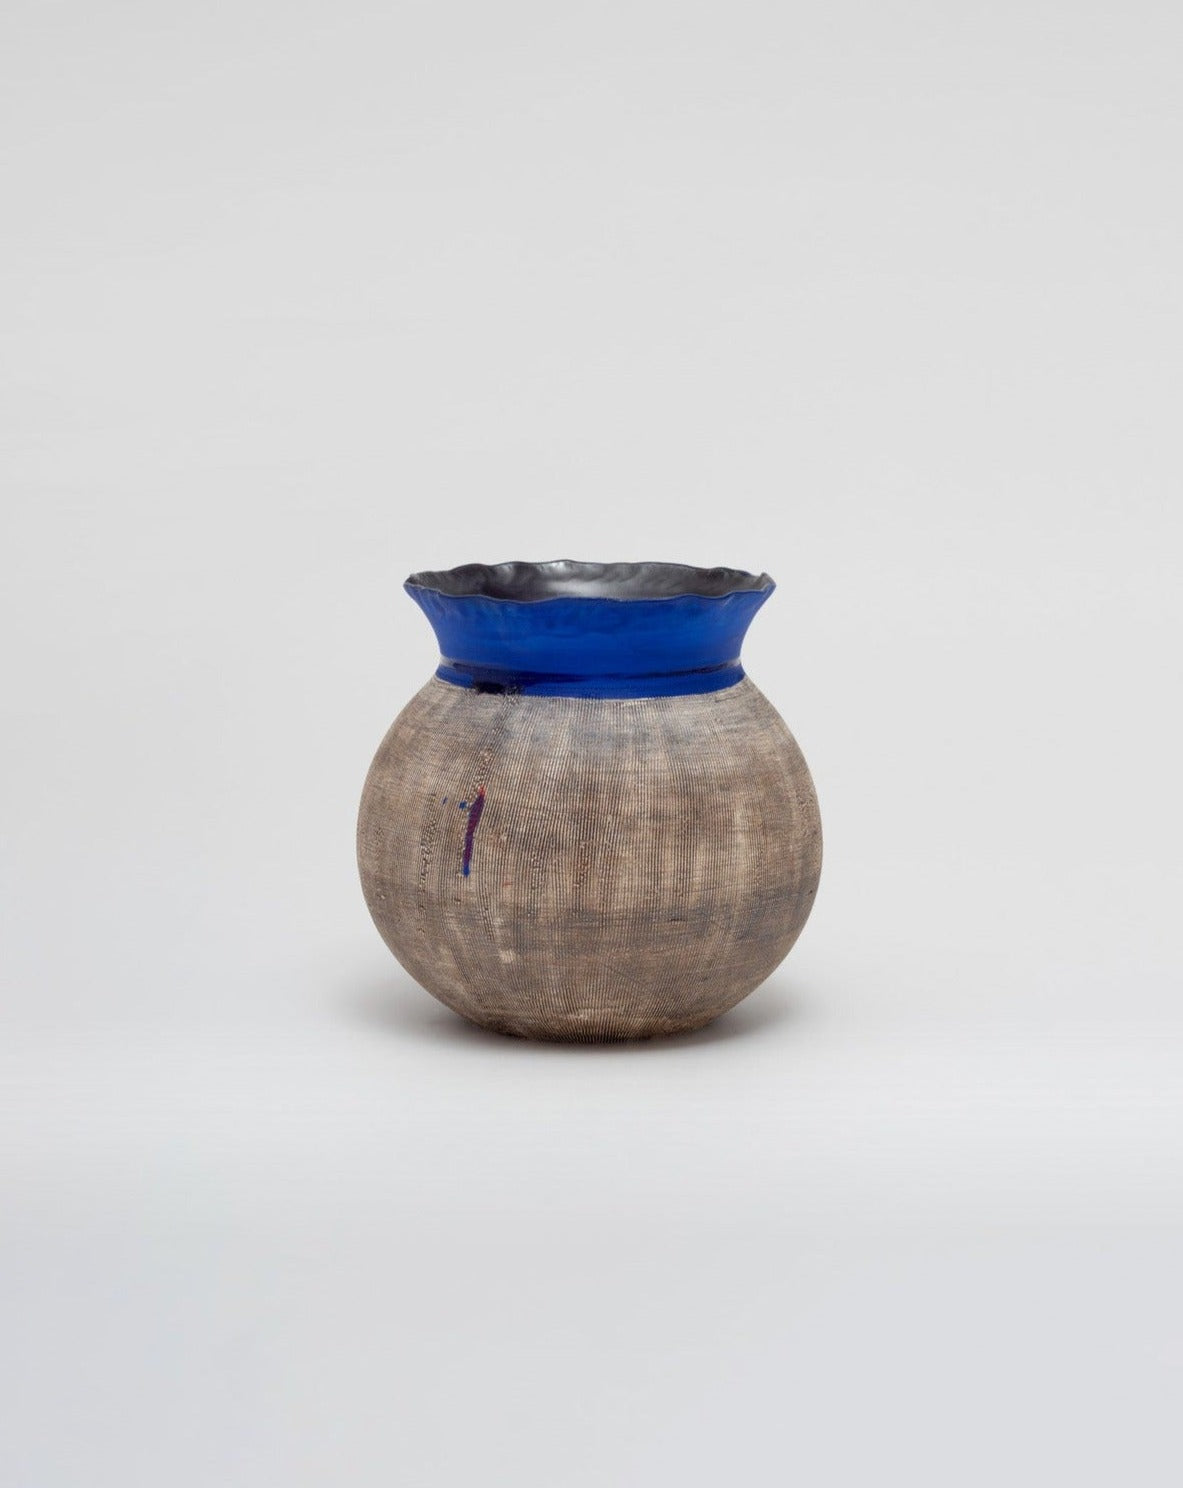 hand built vase by Zizipho Poswa for Imiso ceramics